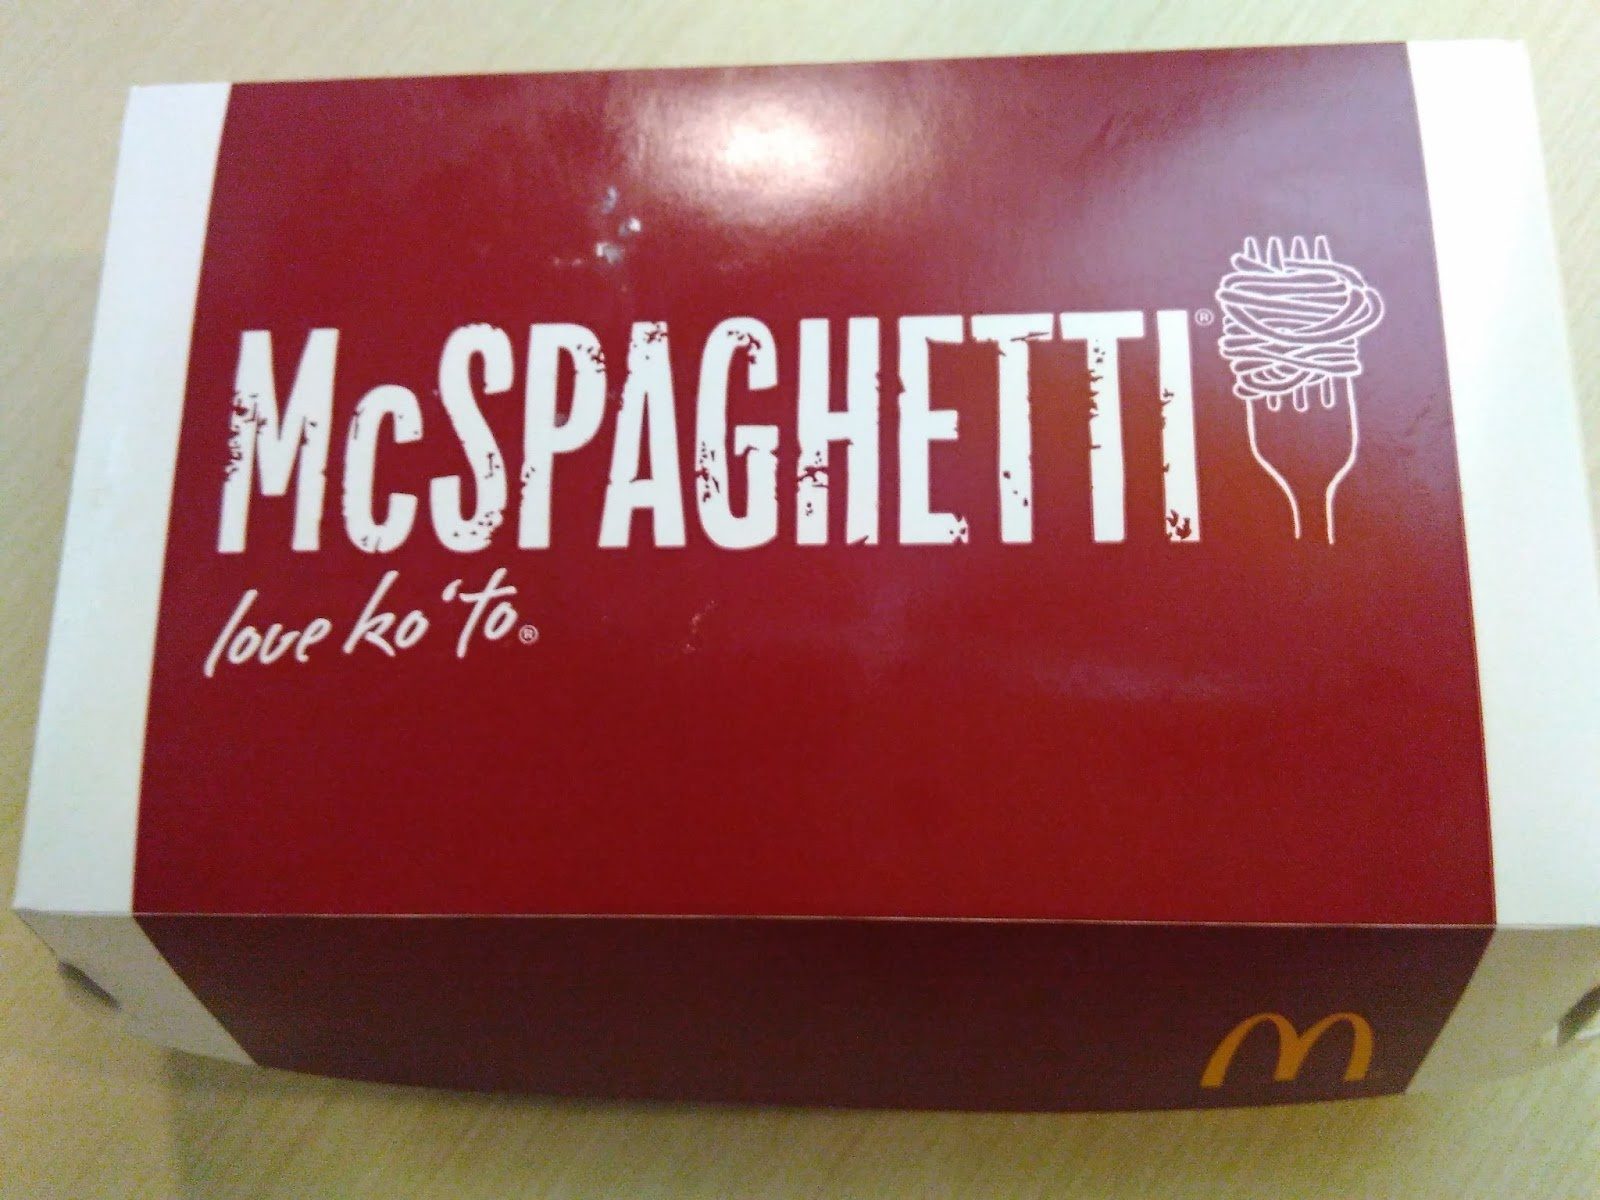 Failed products - mcdonalds philippines mcspaghetti